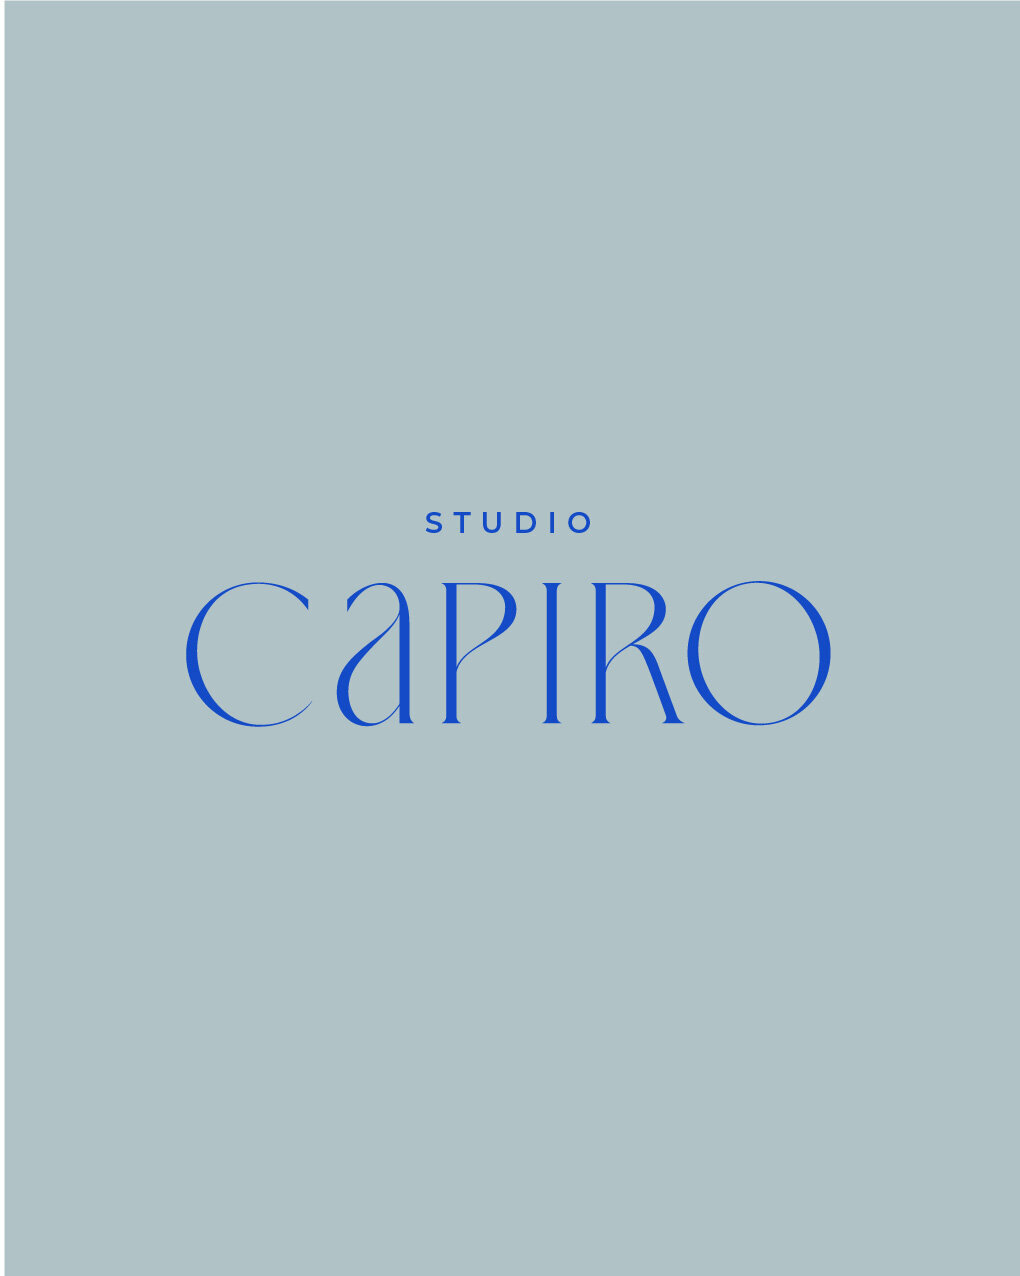 Semi Custom Brand - Studio Capiro-05